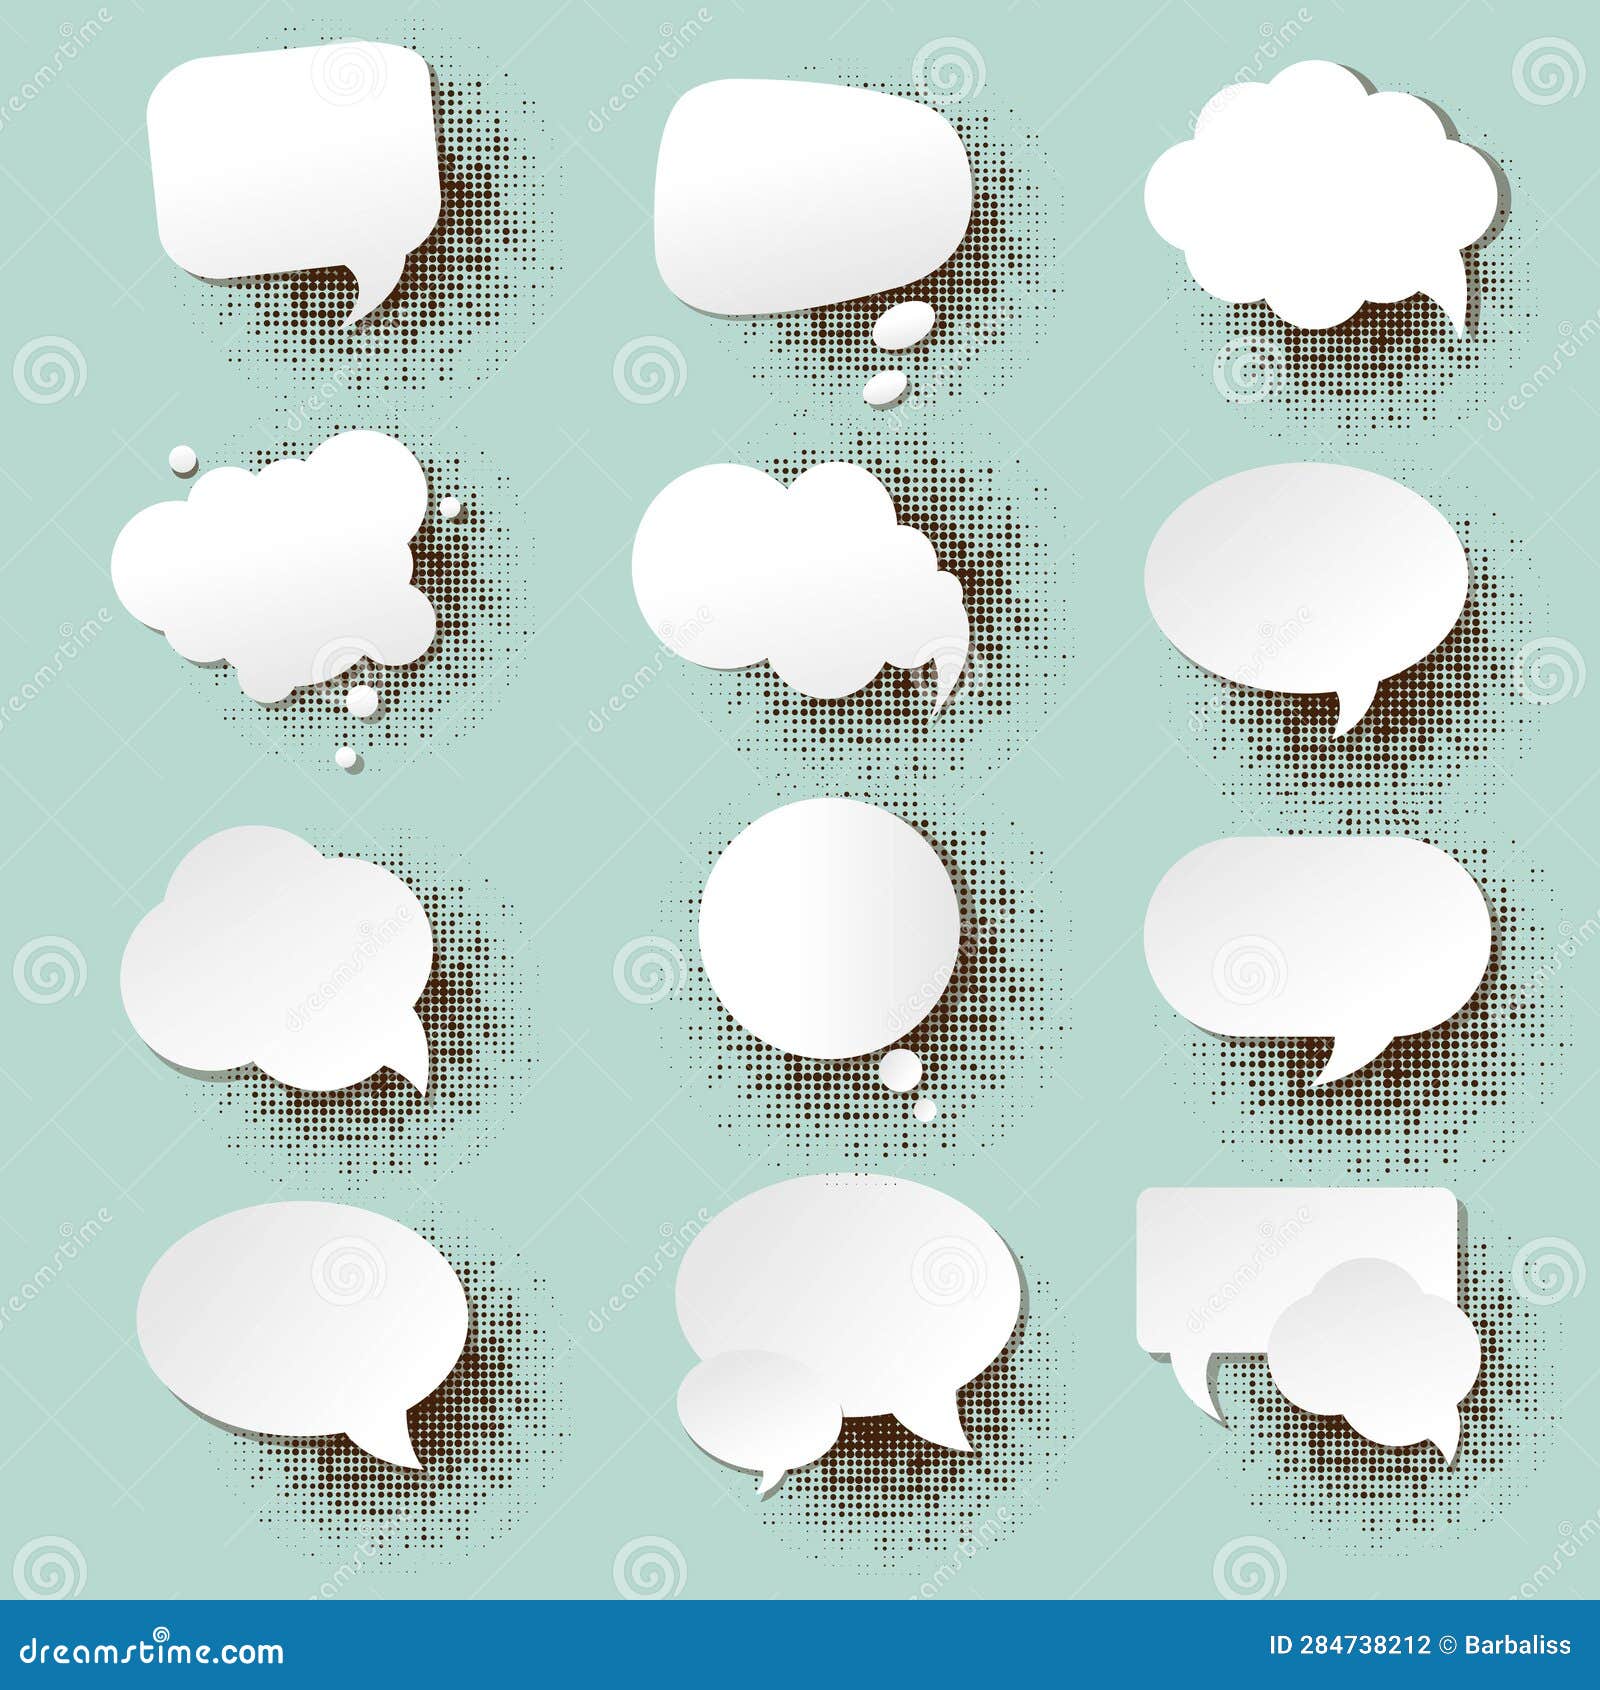 speech bubble set with mint background